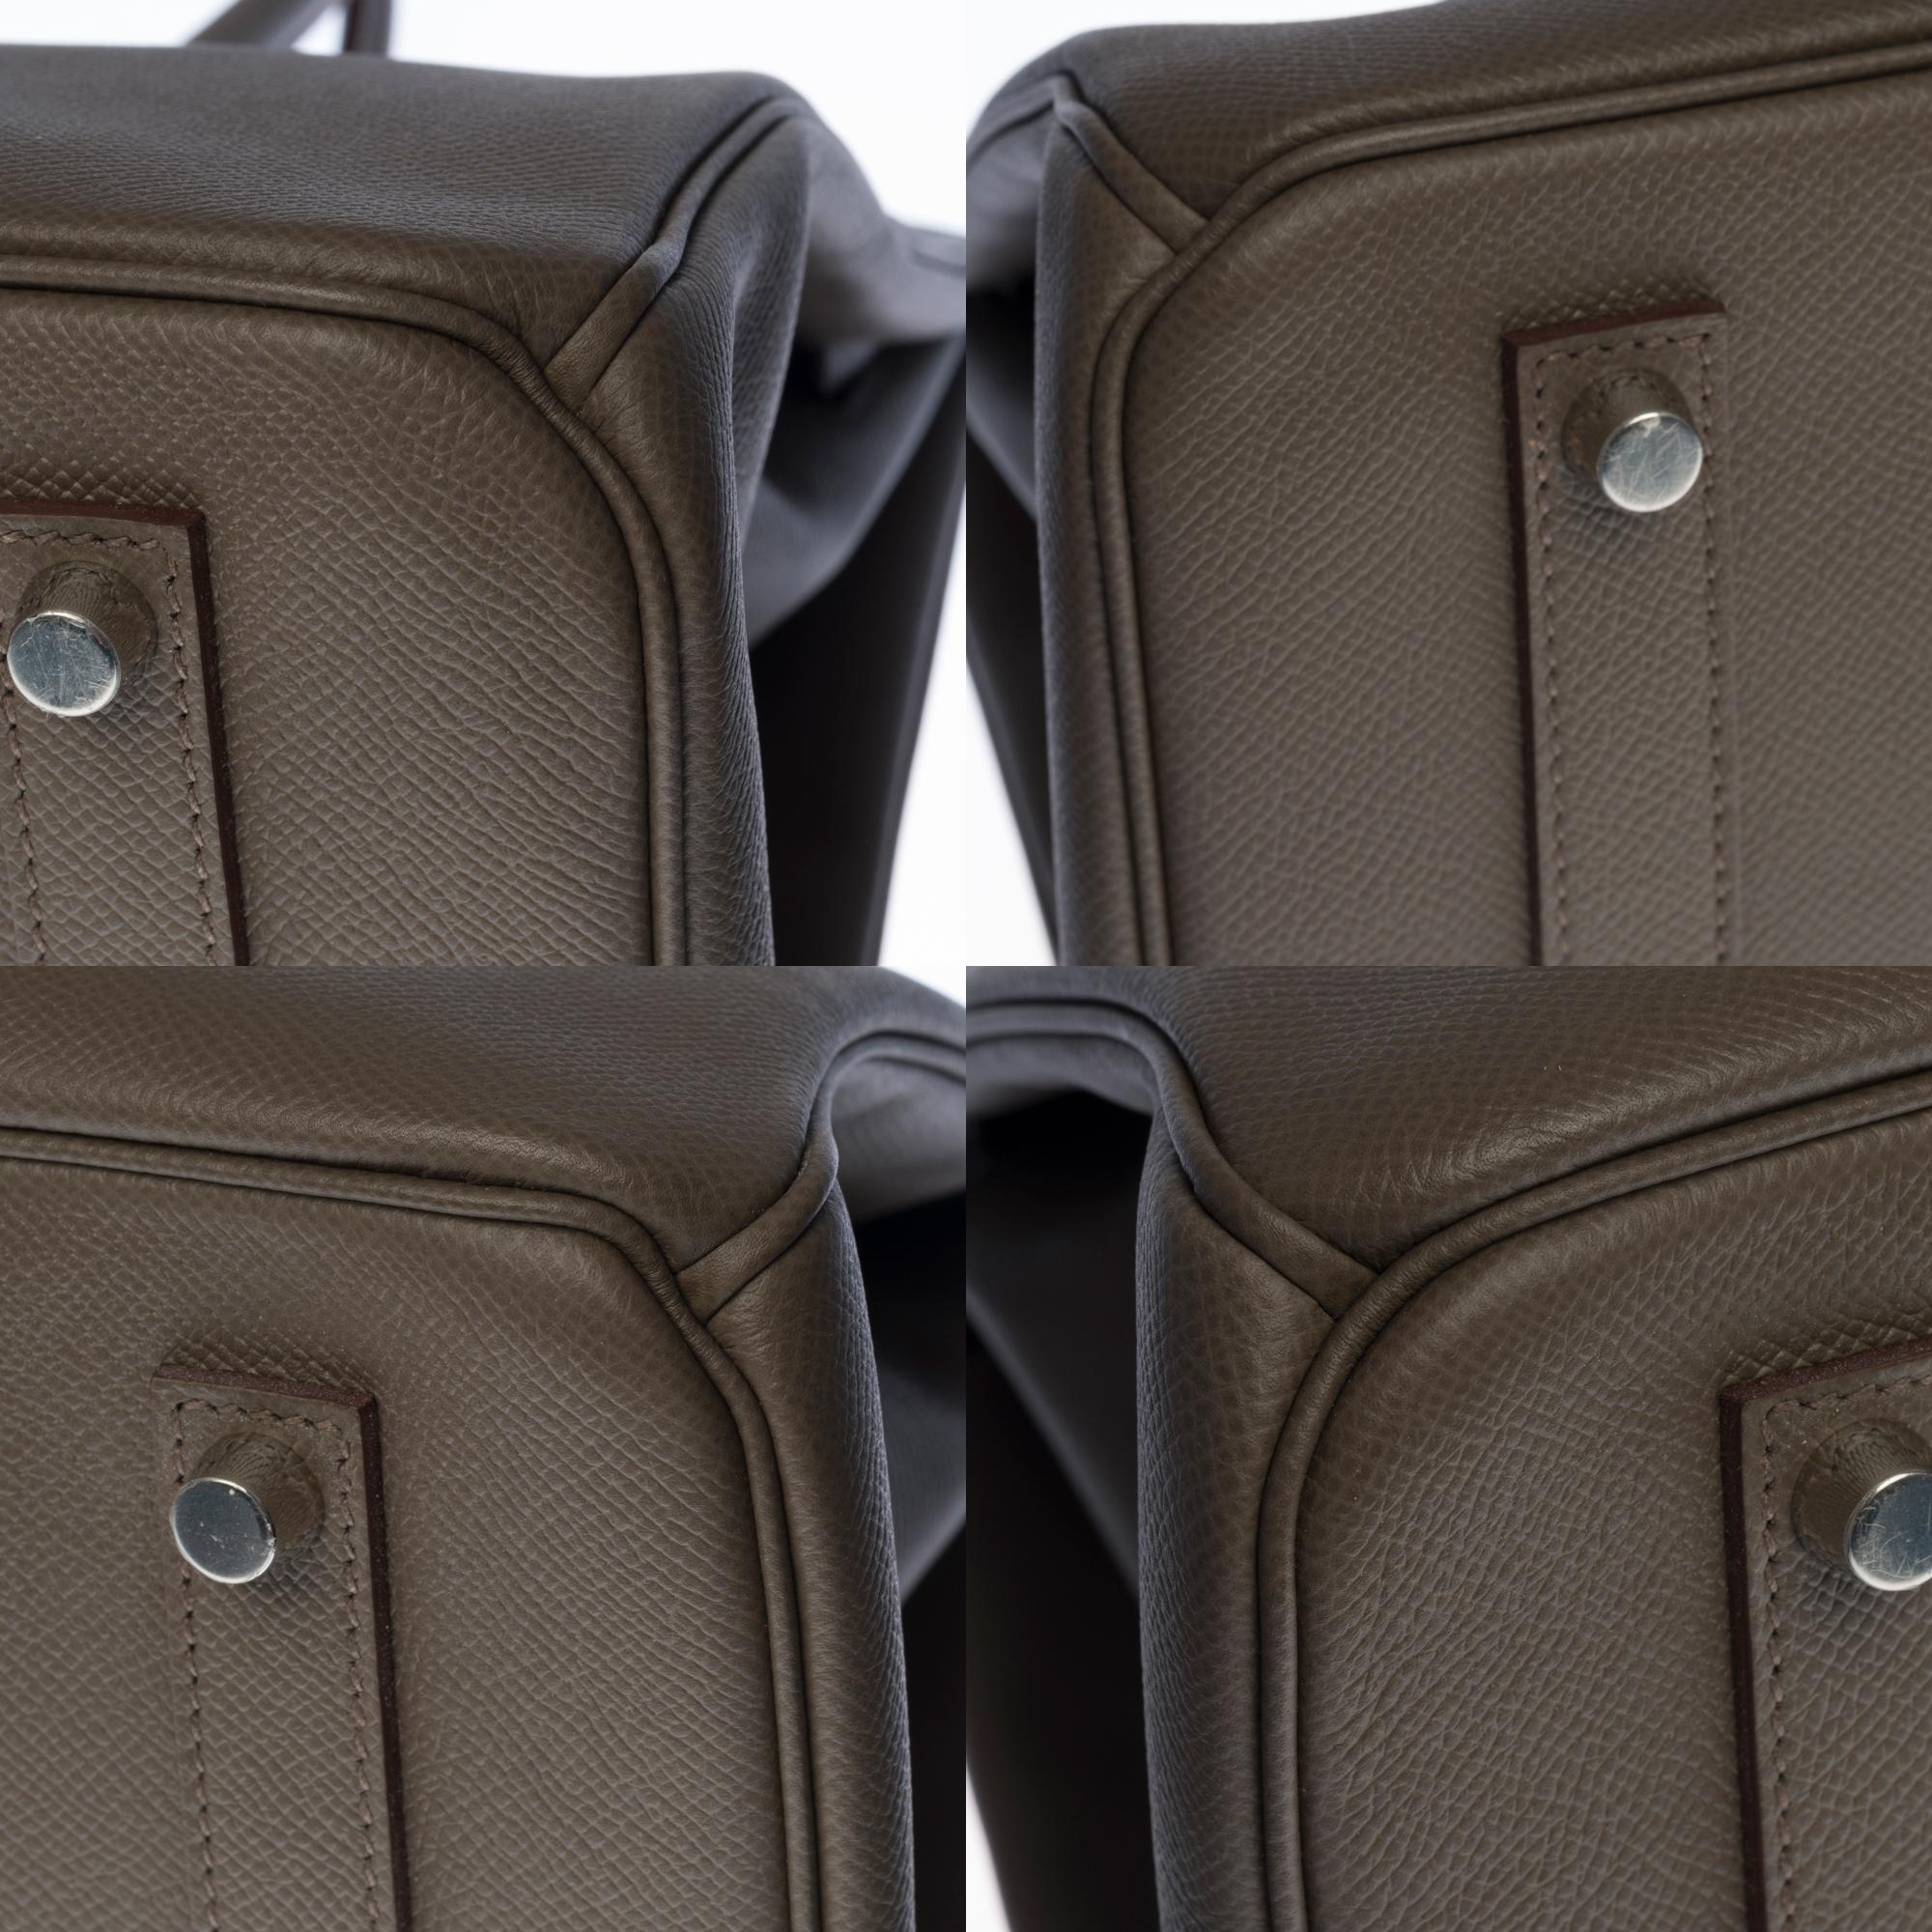 Brand New -Full set-Hermès Birkin 35 handbag in Etain Epsom leather, SHW 3